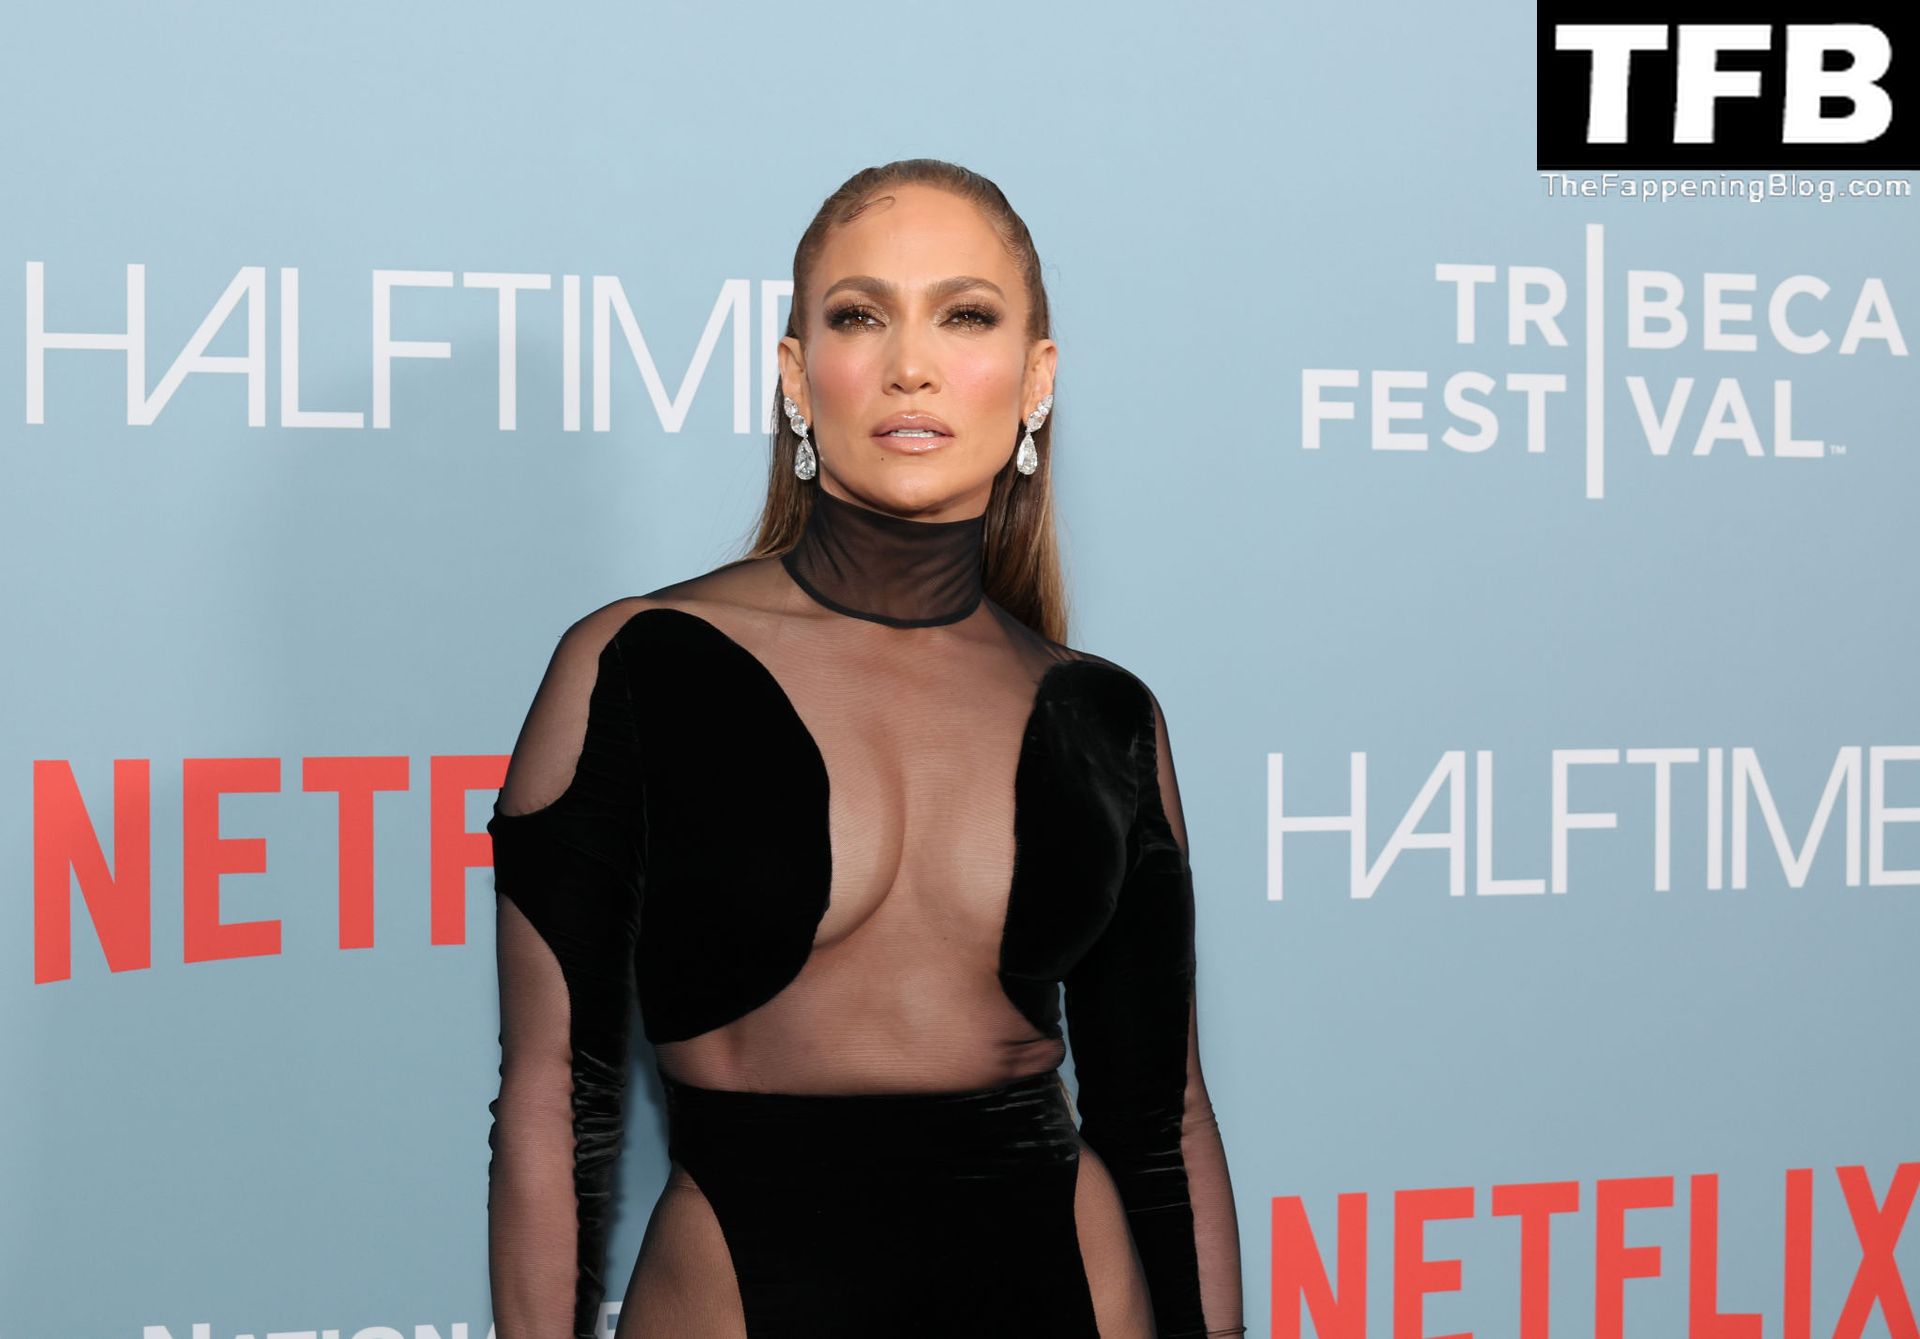 Jennifer-Lopez-Sexy-The-Fappening-Blog-44-1.jpg